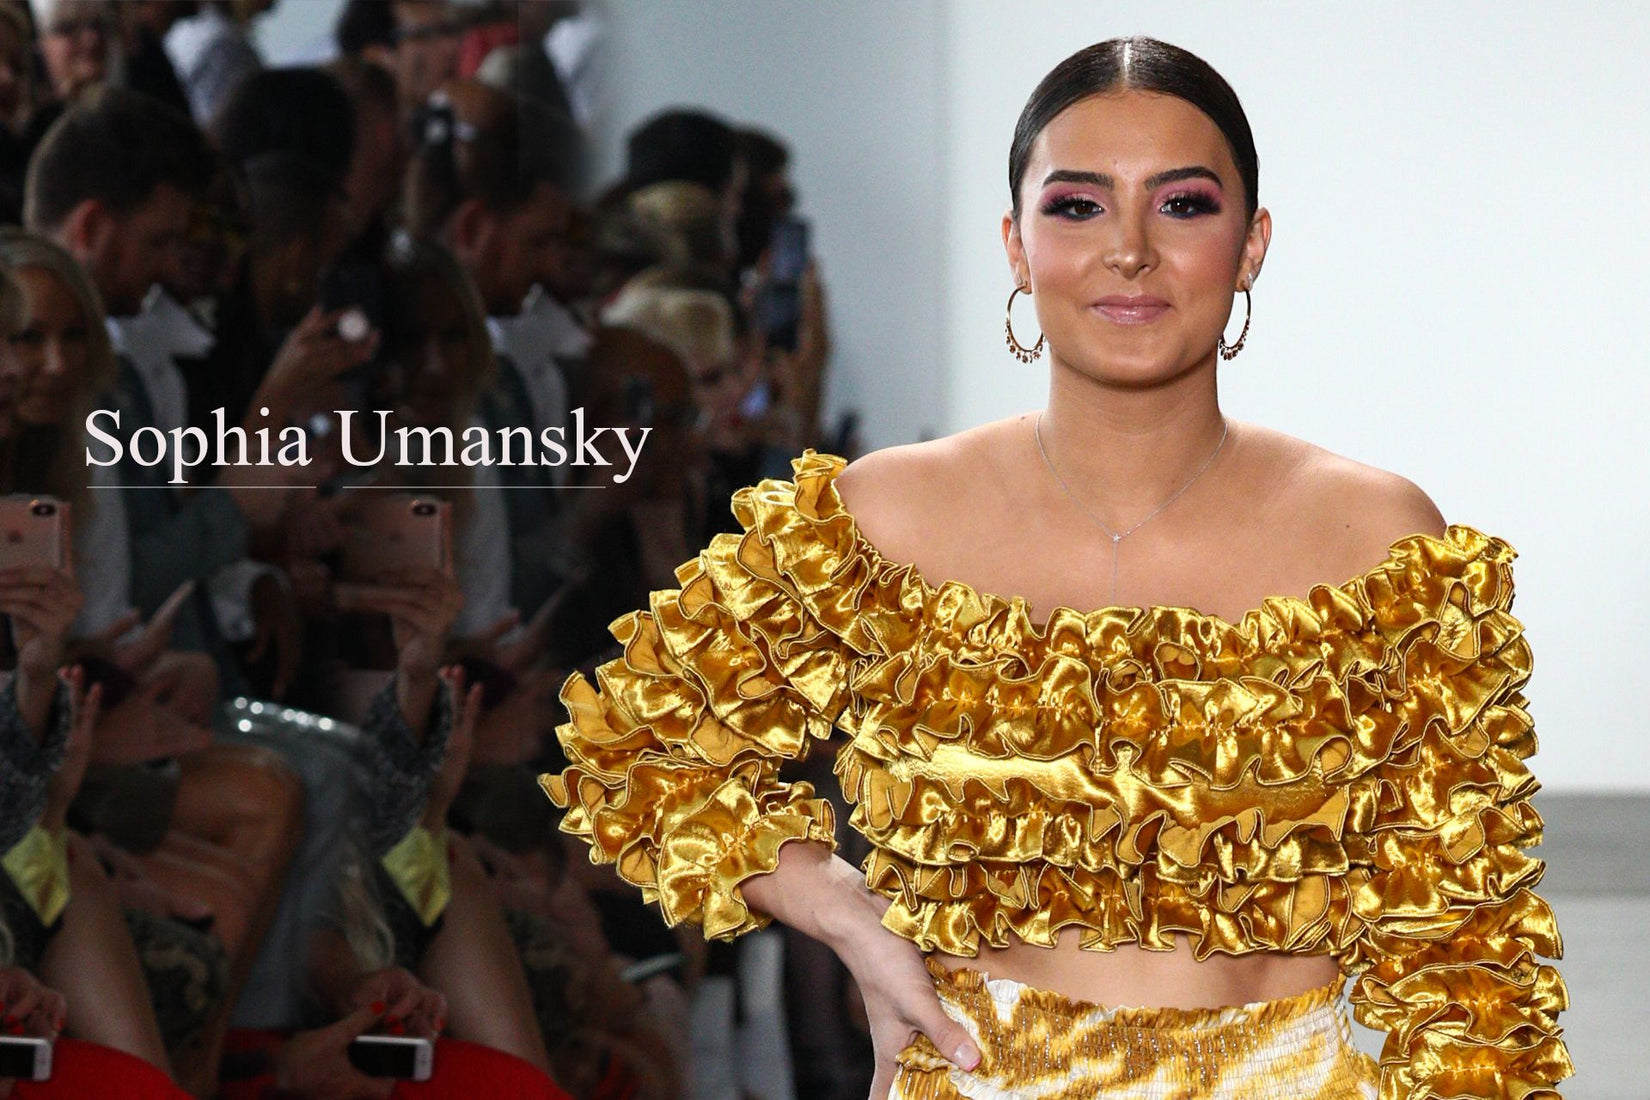 Sophia Umansky Kyle Richards Daughter Walked the Runway | Best of New York Fashion Week 2020